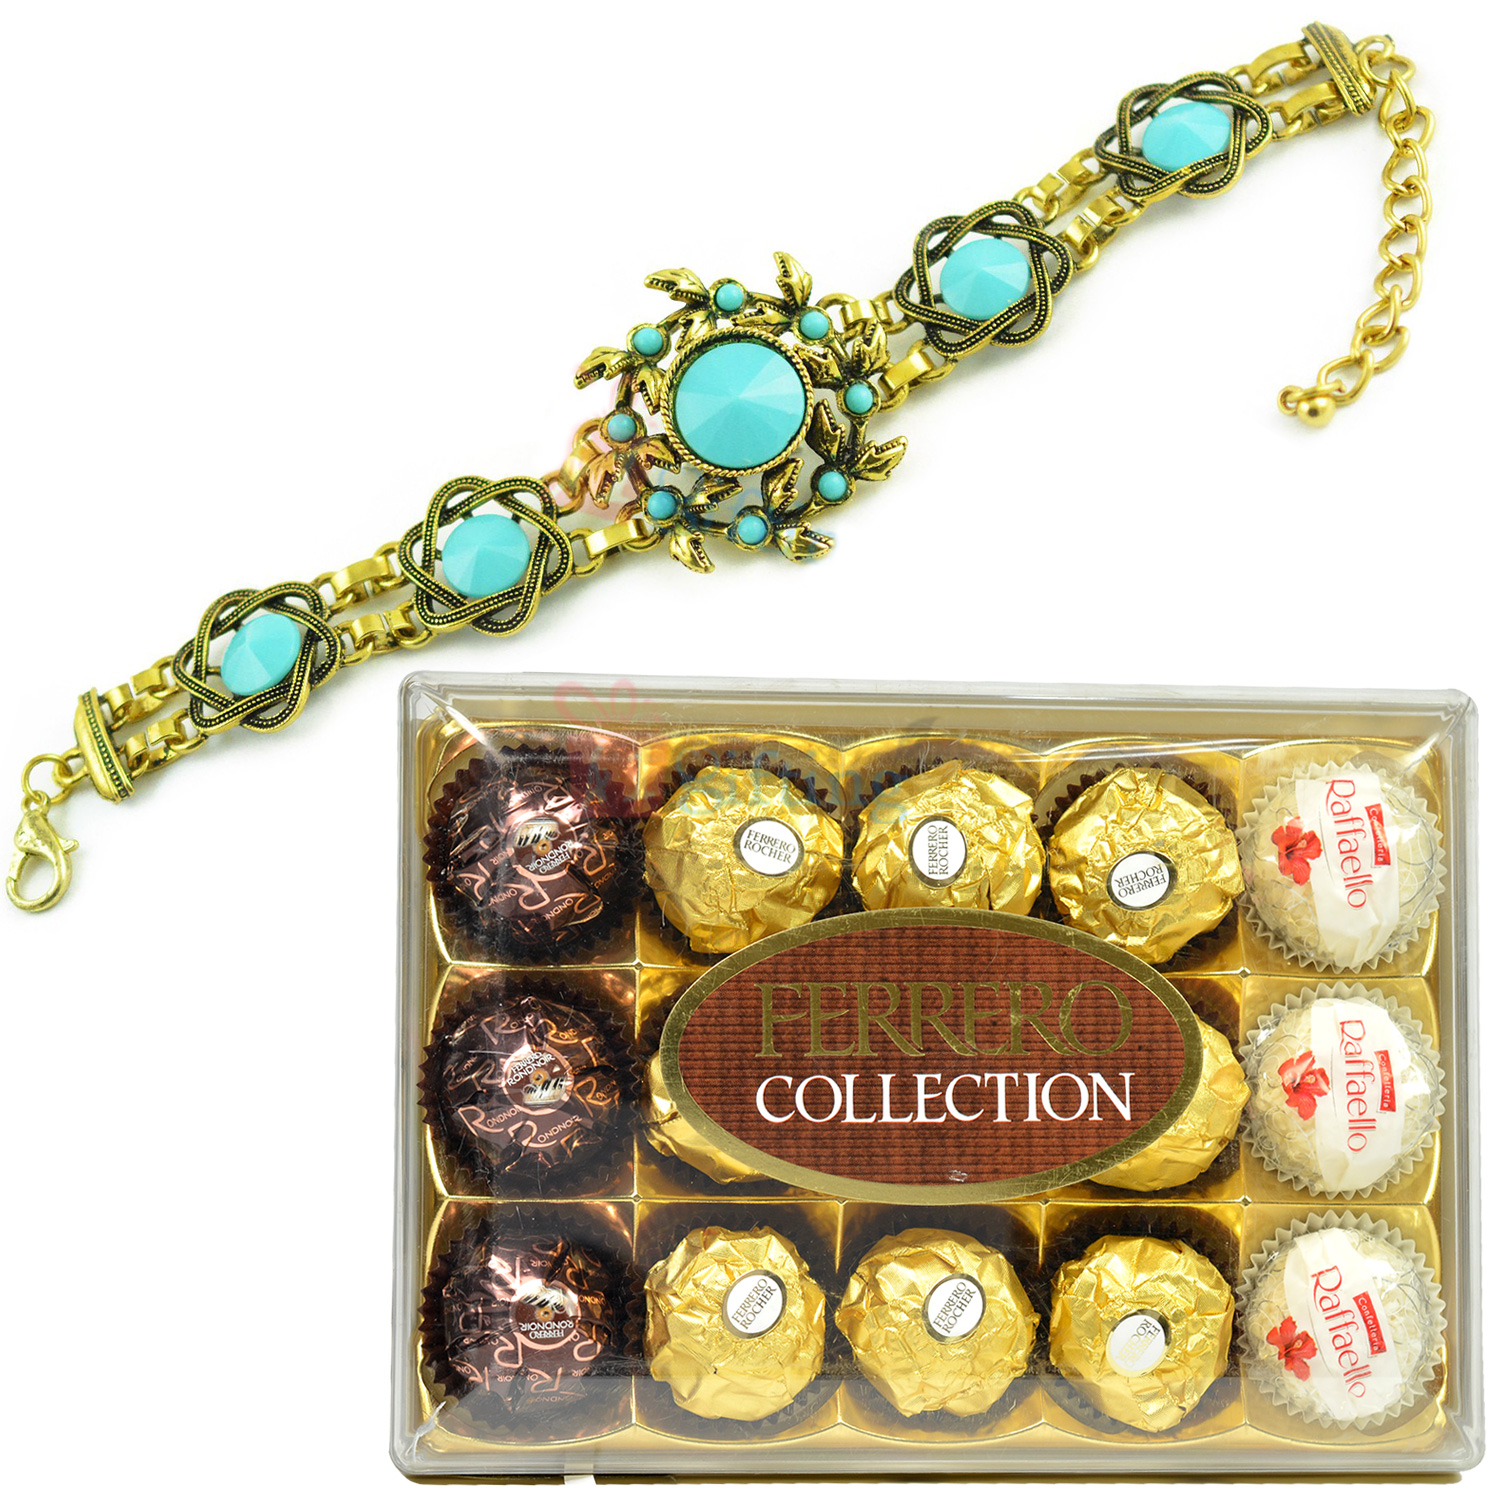 Antique Beautiful Bracelet with T15 Ferrero Rocher Chocolate